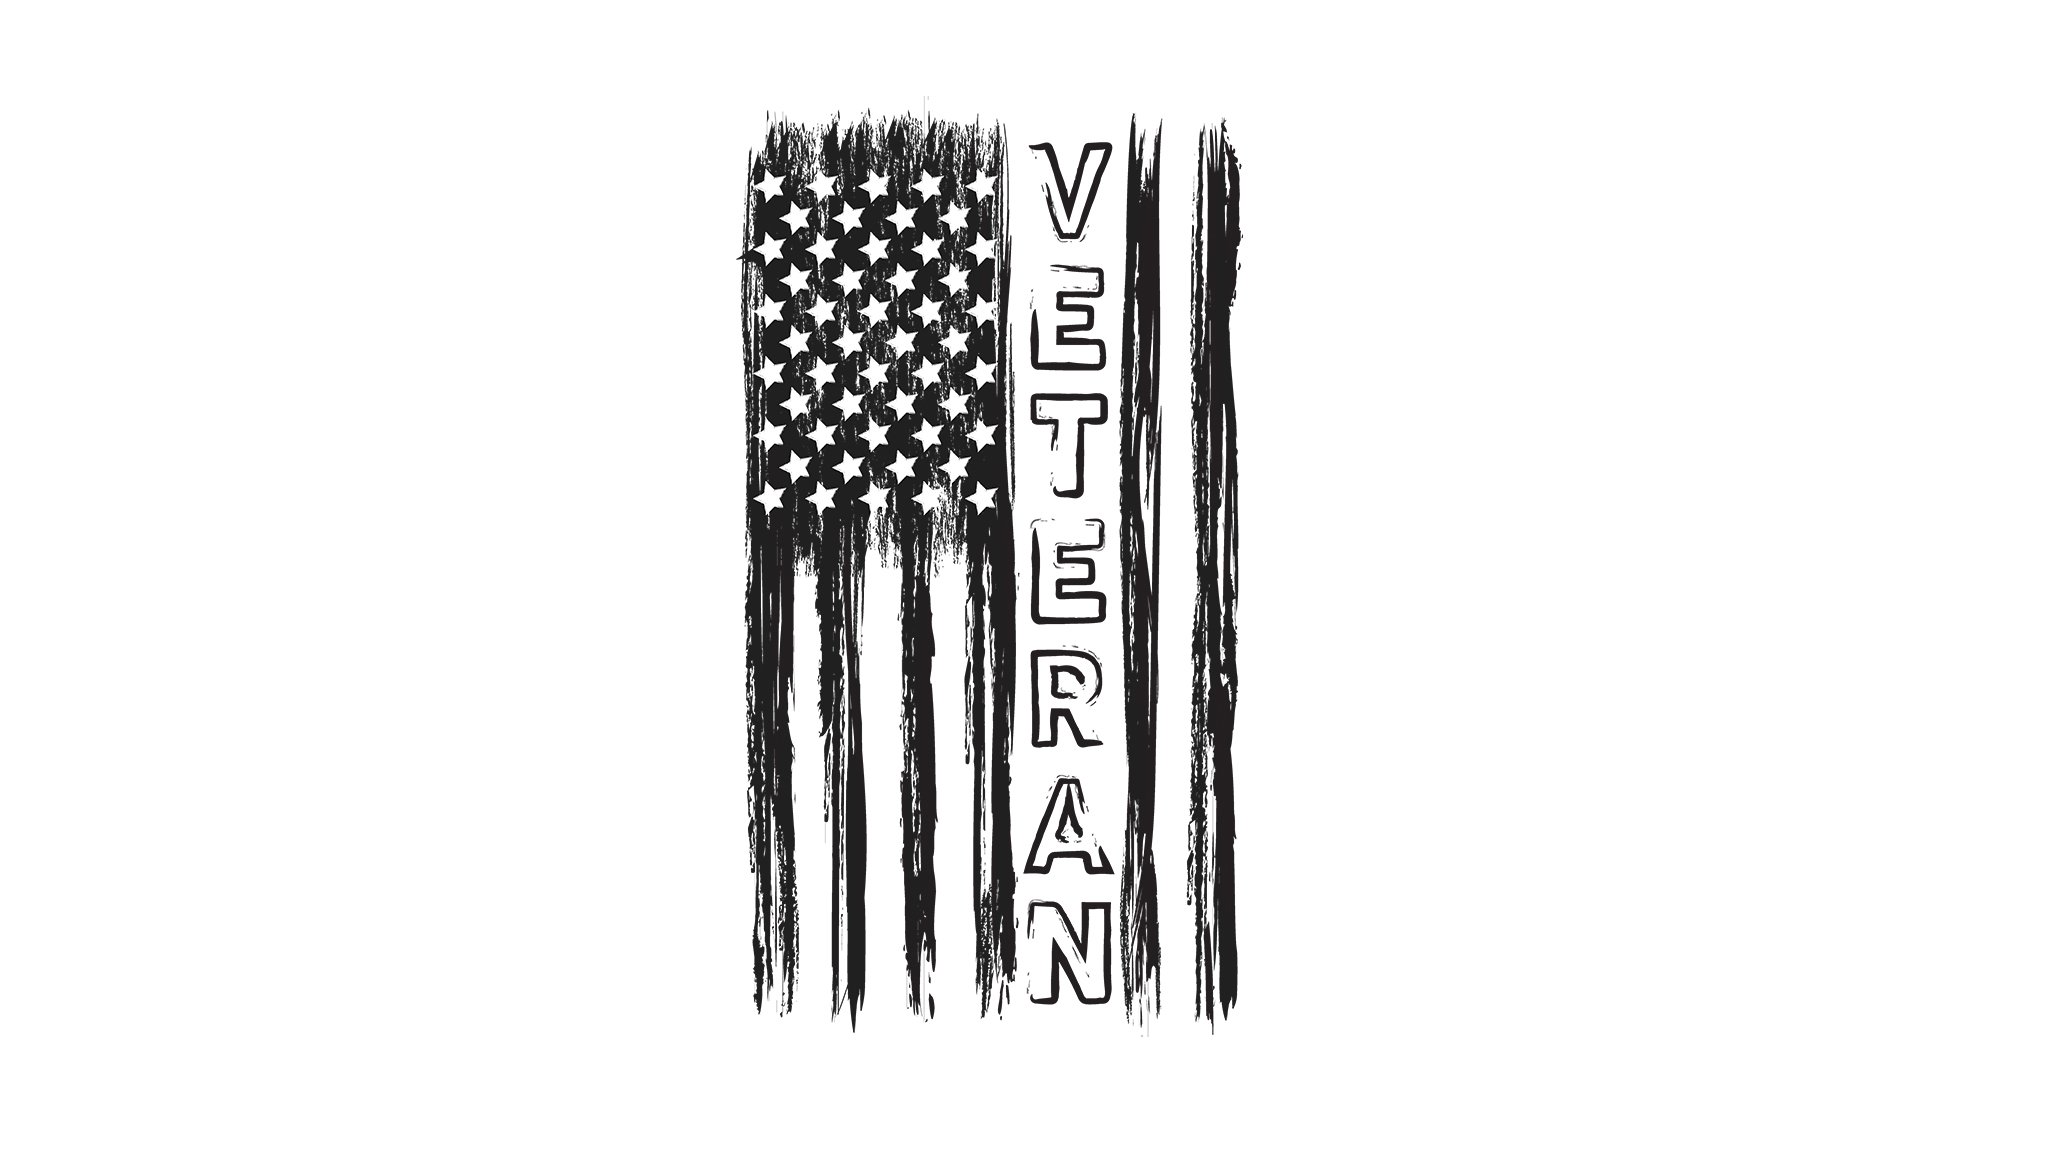 Veteran USA Flag cover image.